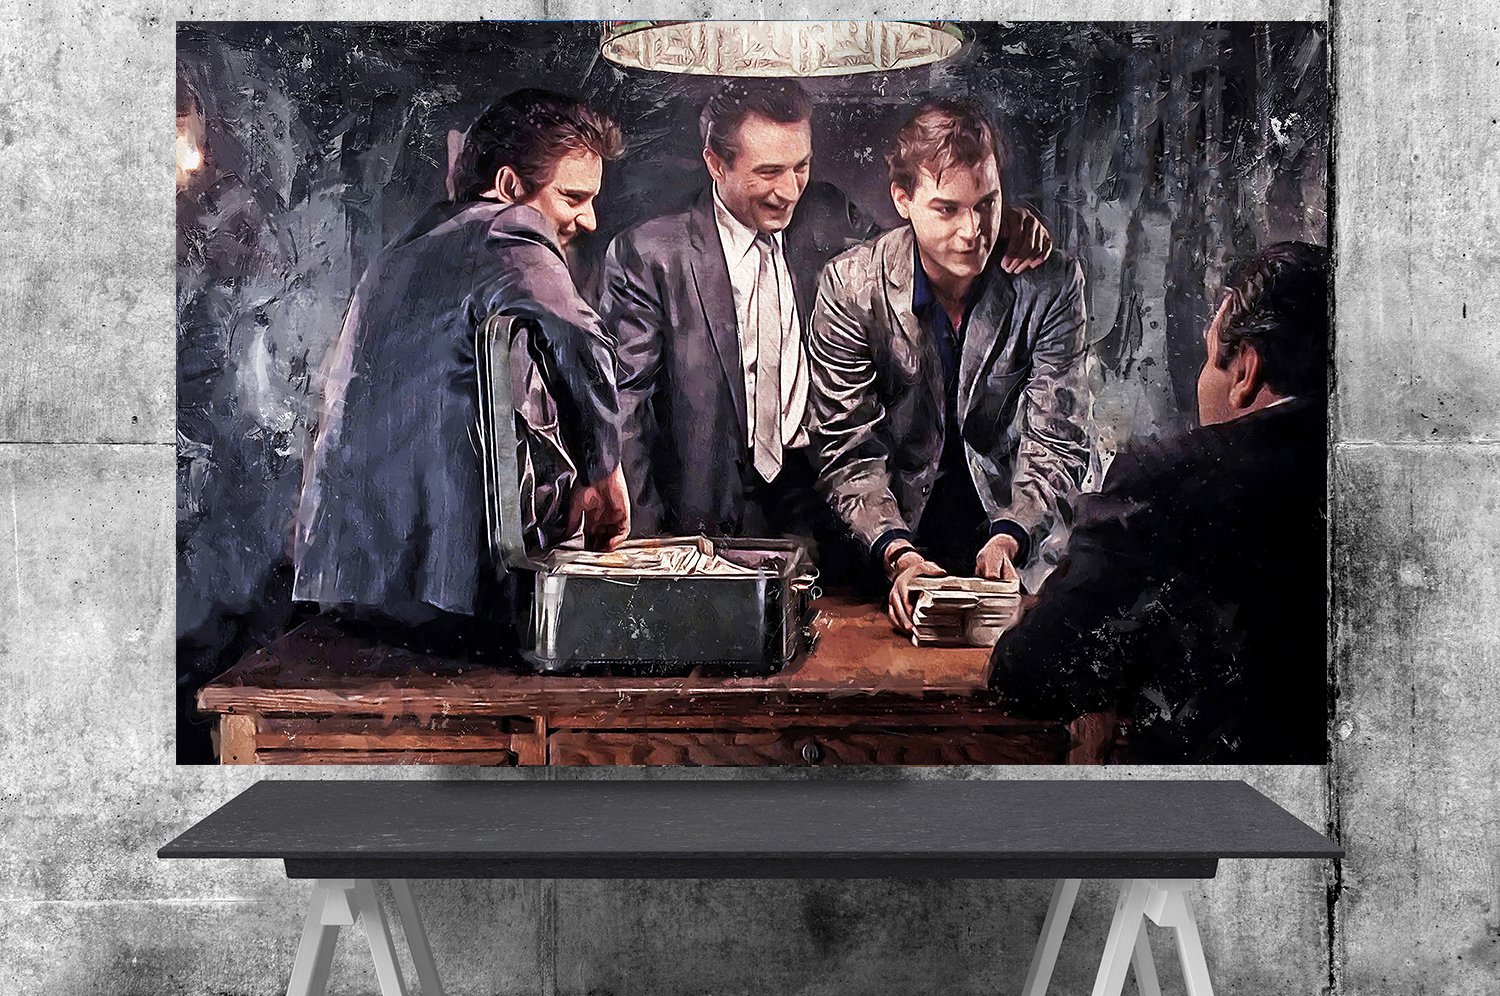 Goodfellas, Robert De Niro, Ray Liotta, Joe Pesci 18"x28" (45cm/70cm) Canvas Print